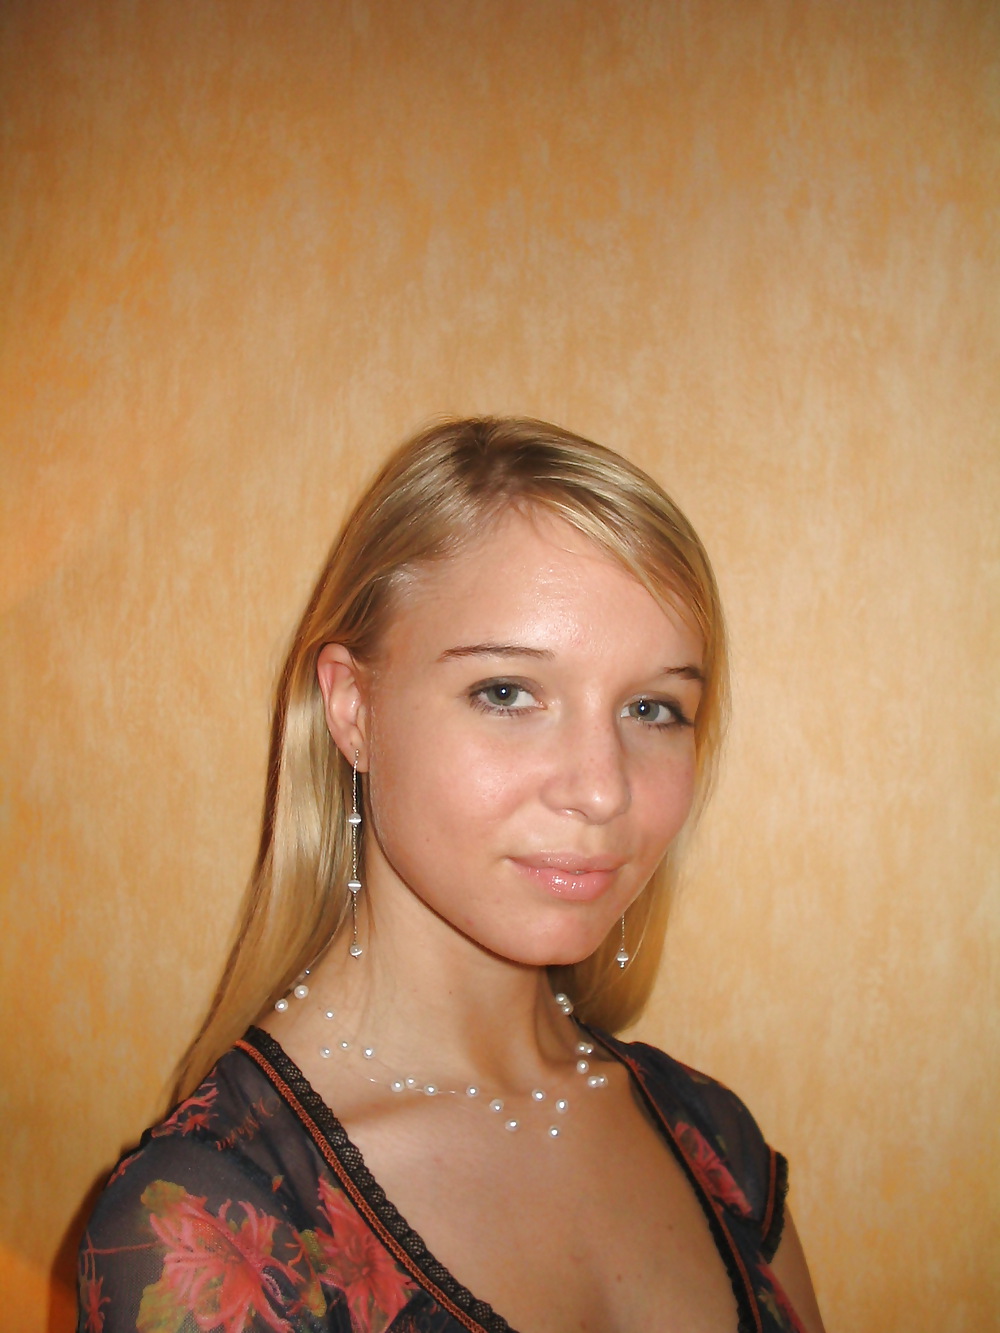 Sexy Blonde German Teen Poses In Lingerie #24813788